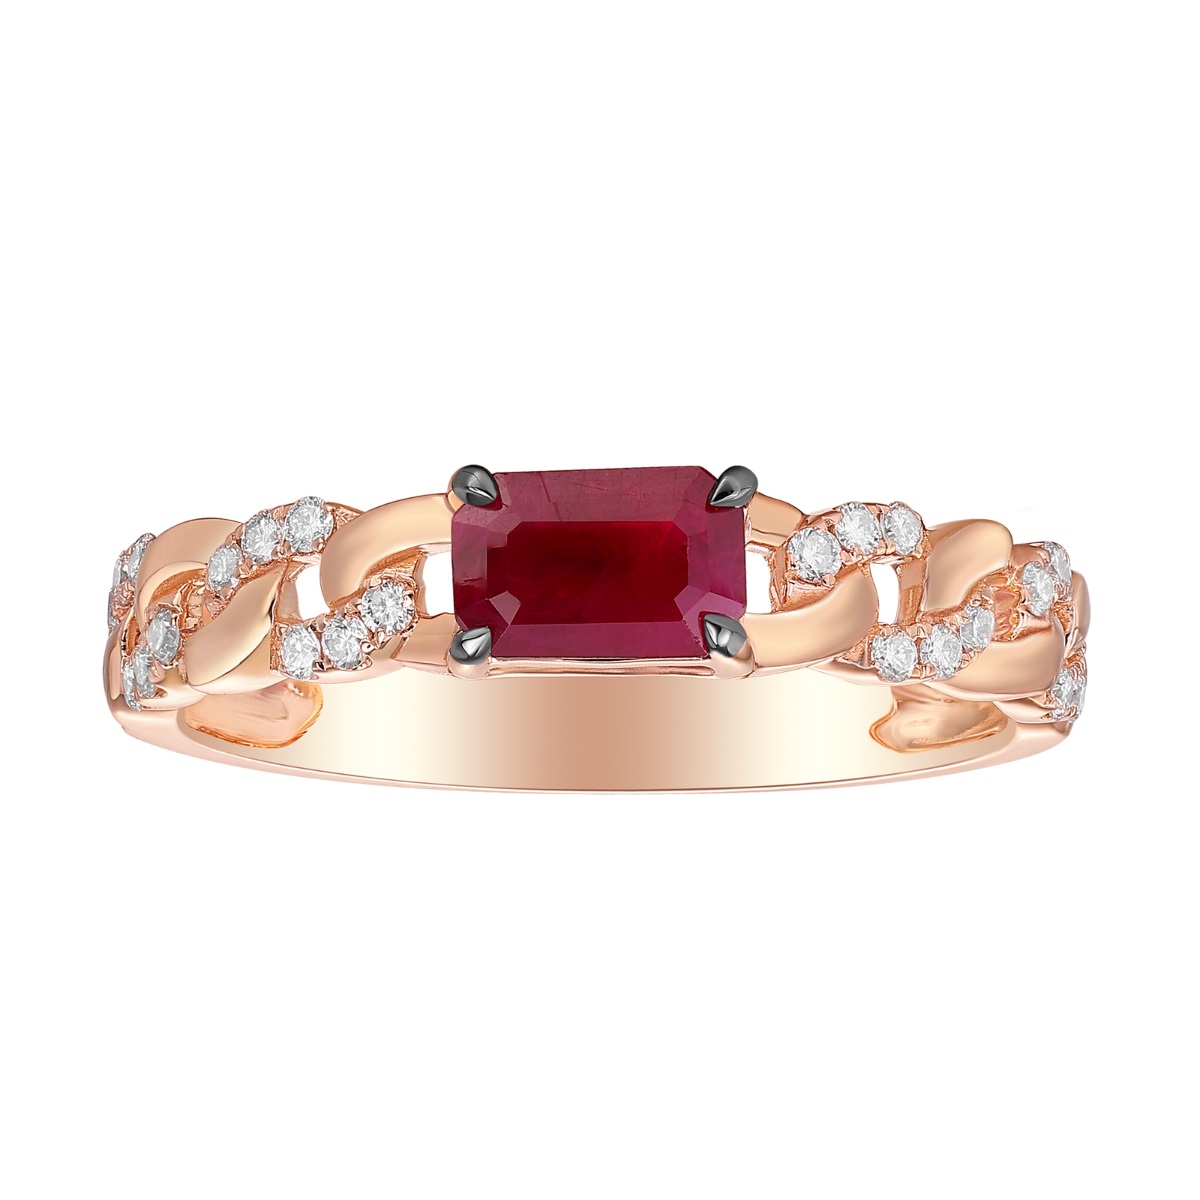 R36364RUW – 18K Rose Gold  Diamond and Gemstone Ring, 0.83 TCW